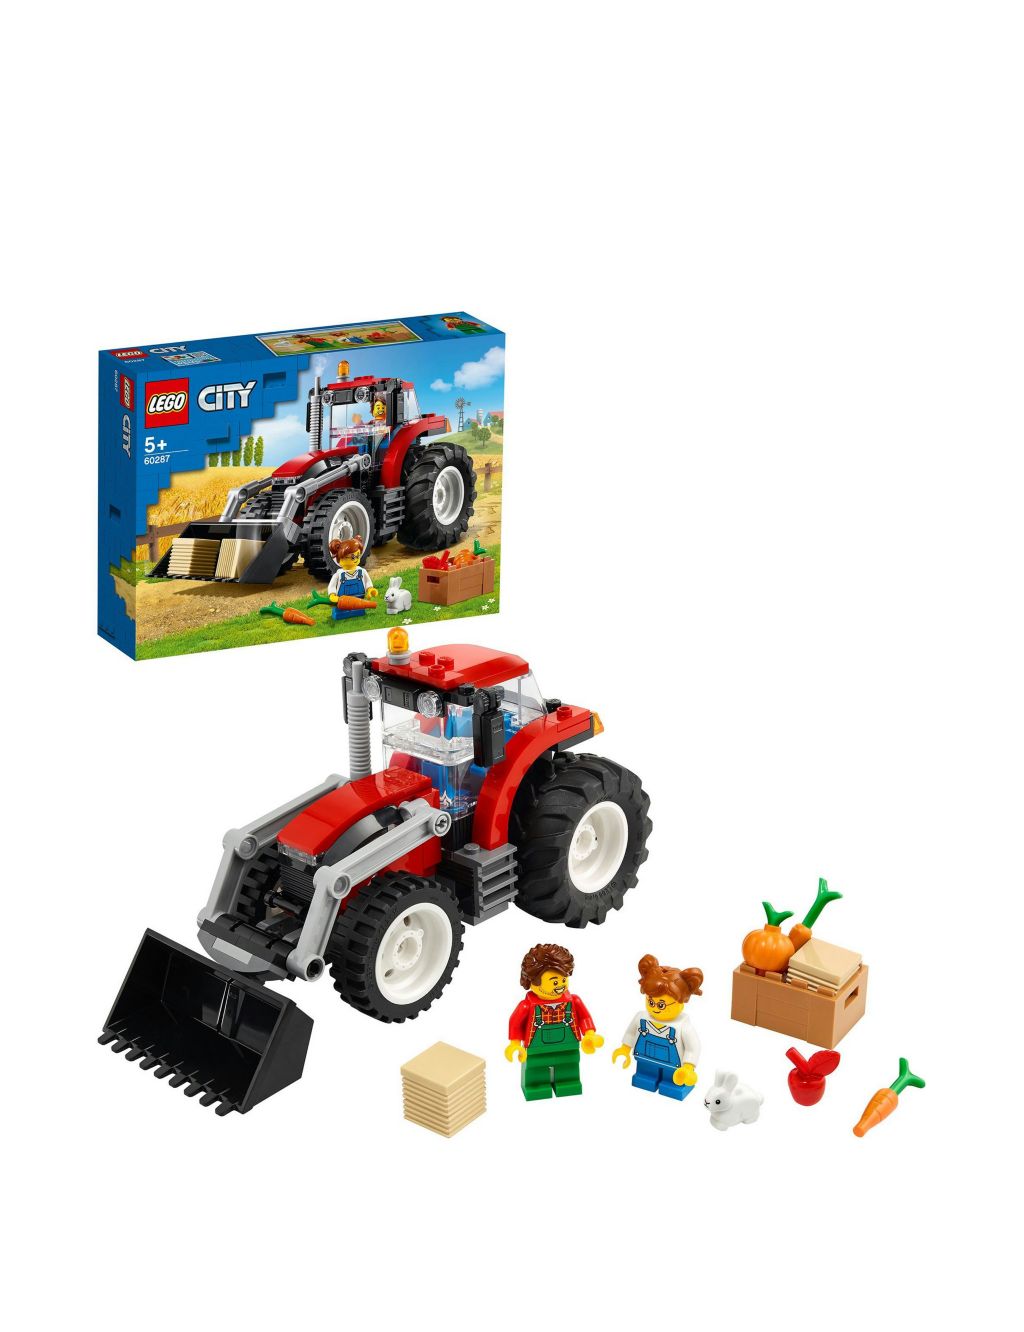 LEGO® City Tractor 60287 (5+ Yrs)